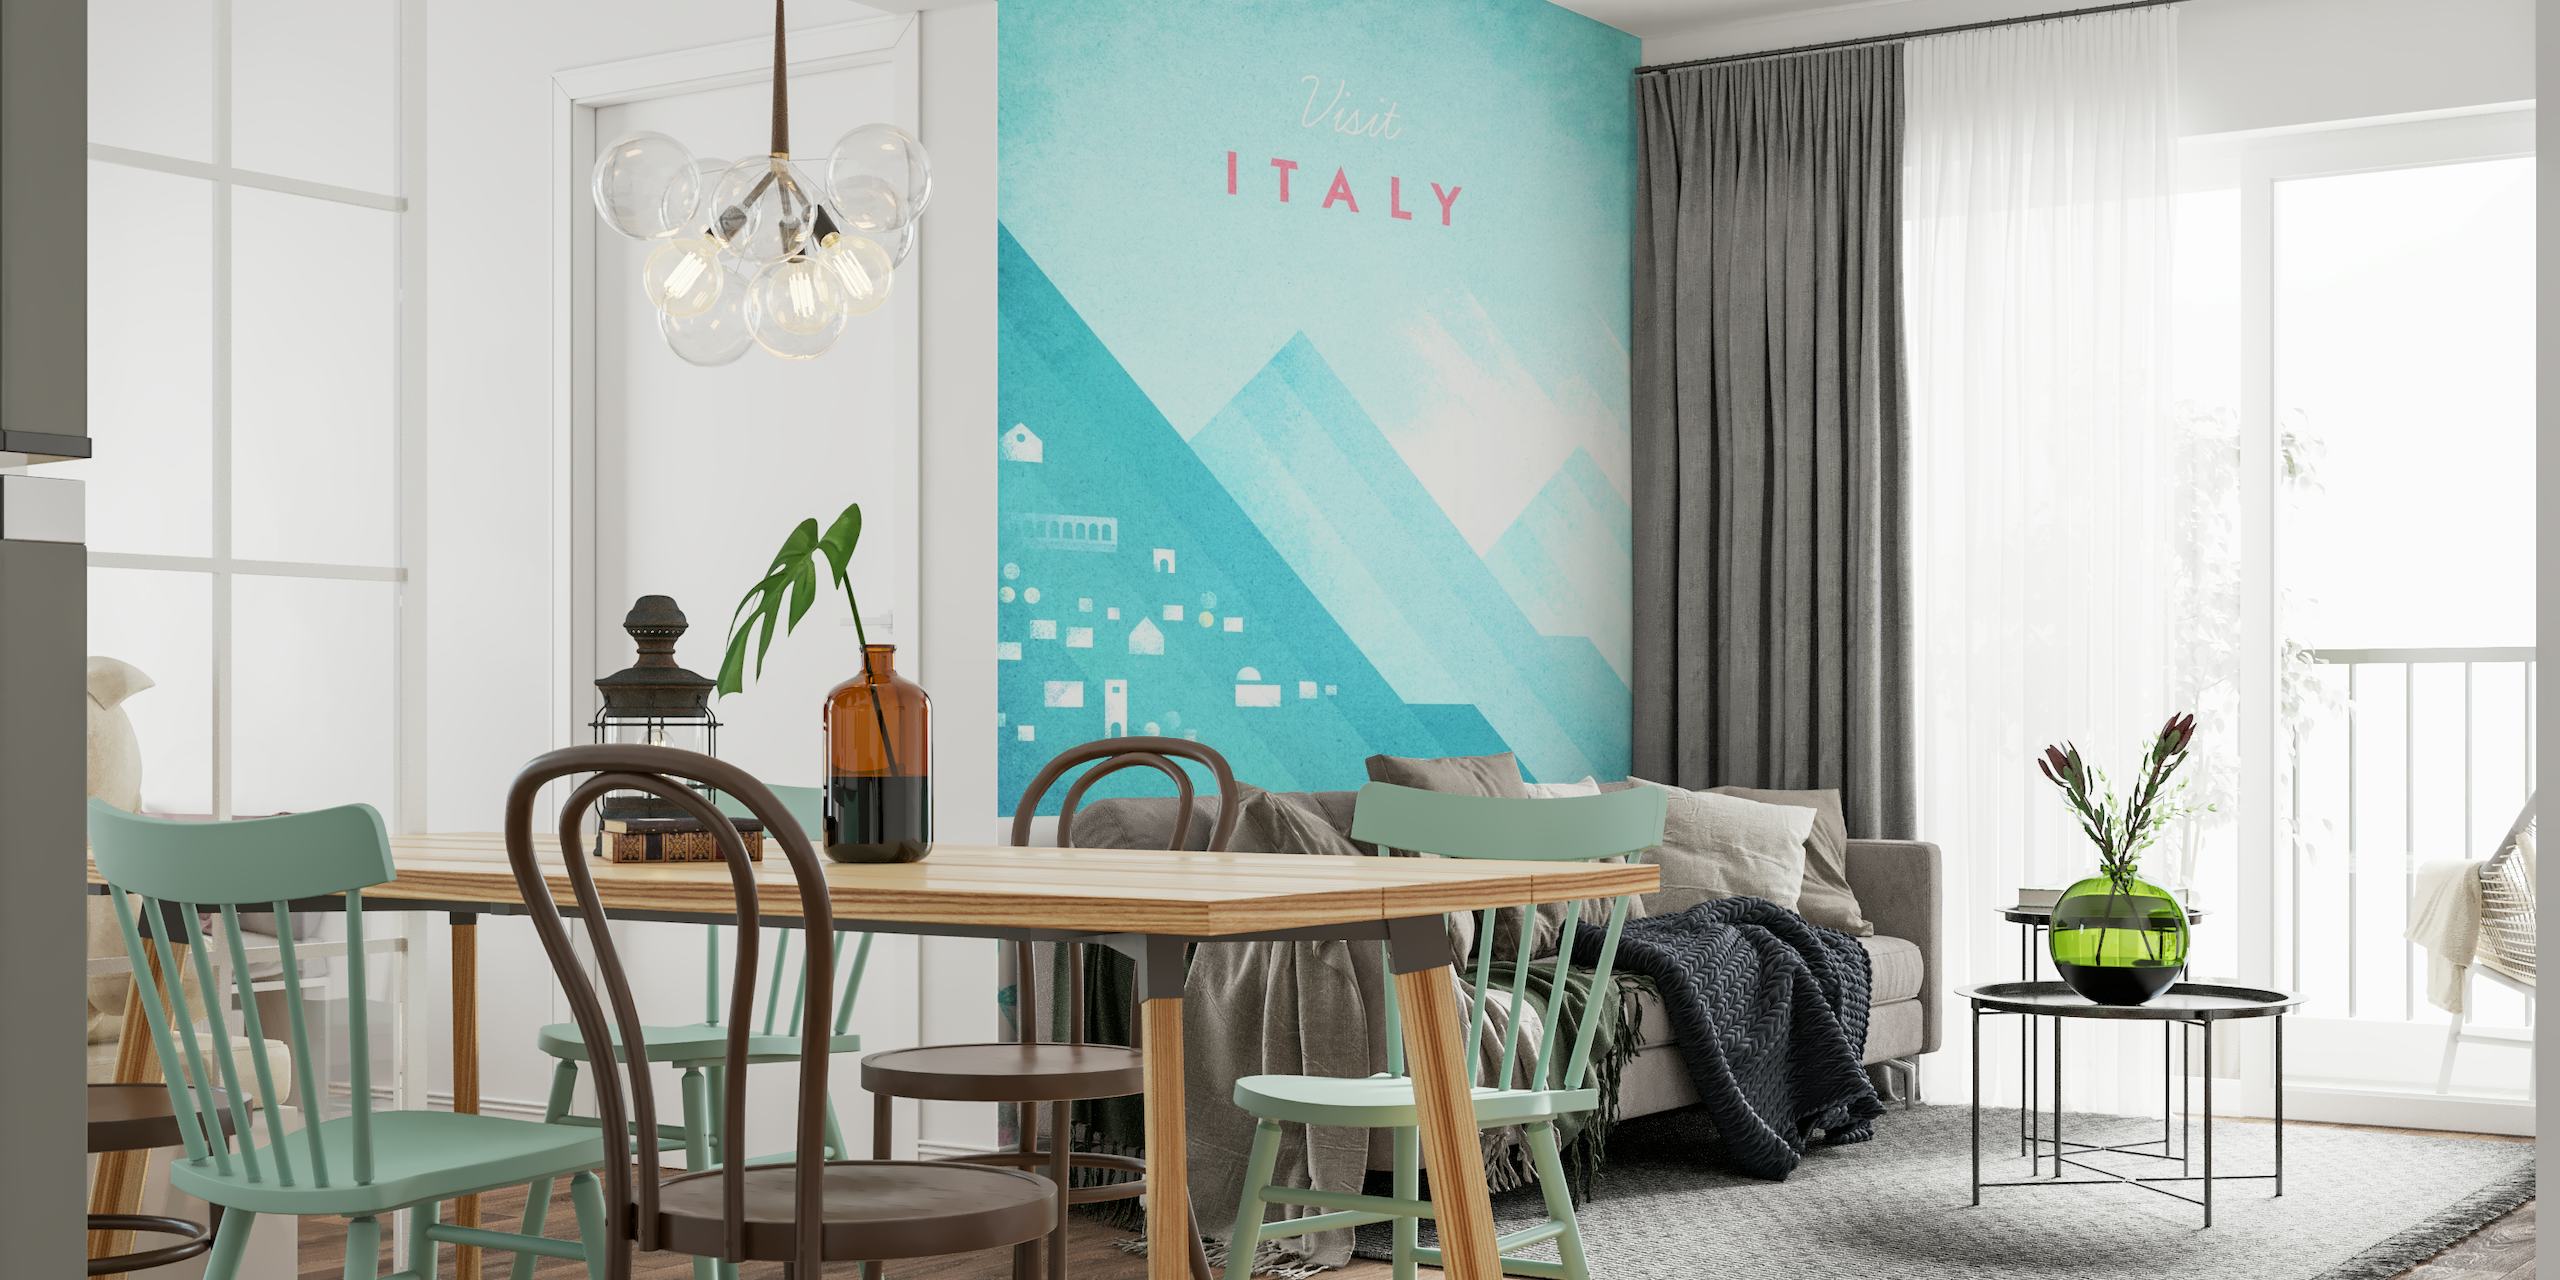 Italy Travel Poster papel pintado